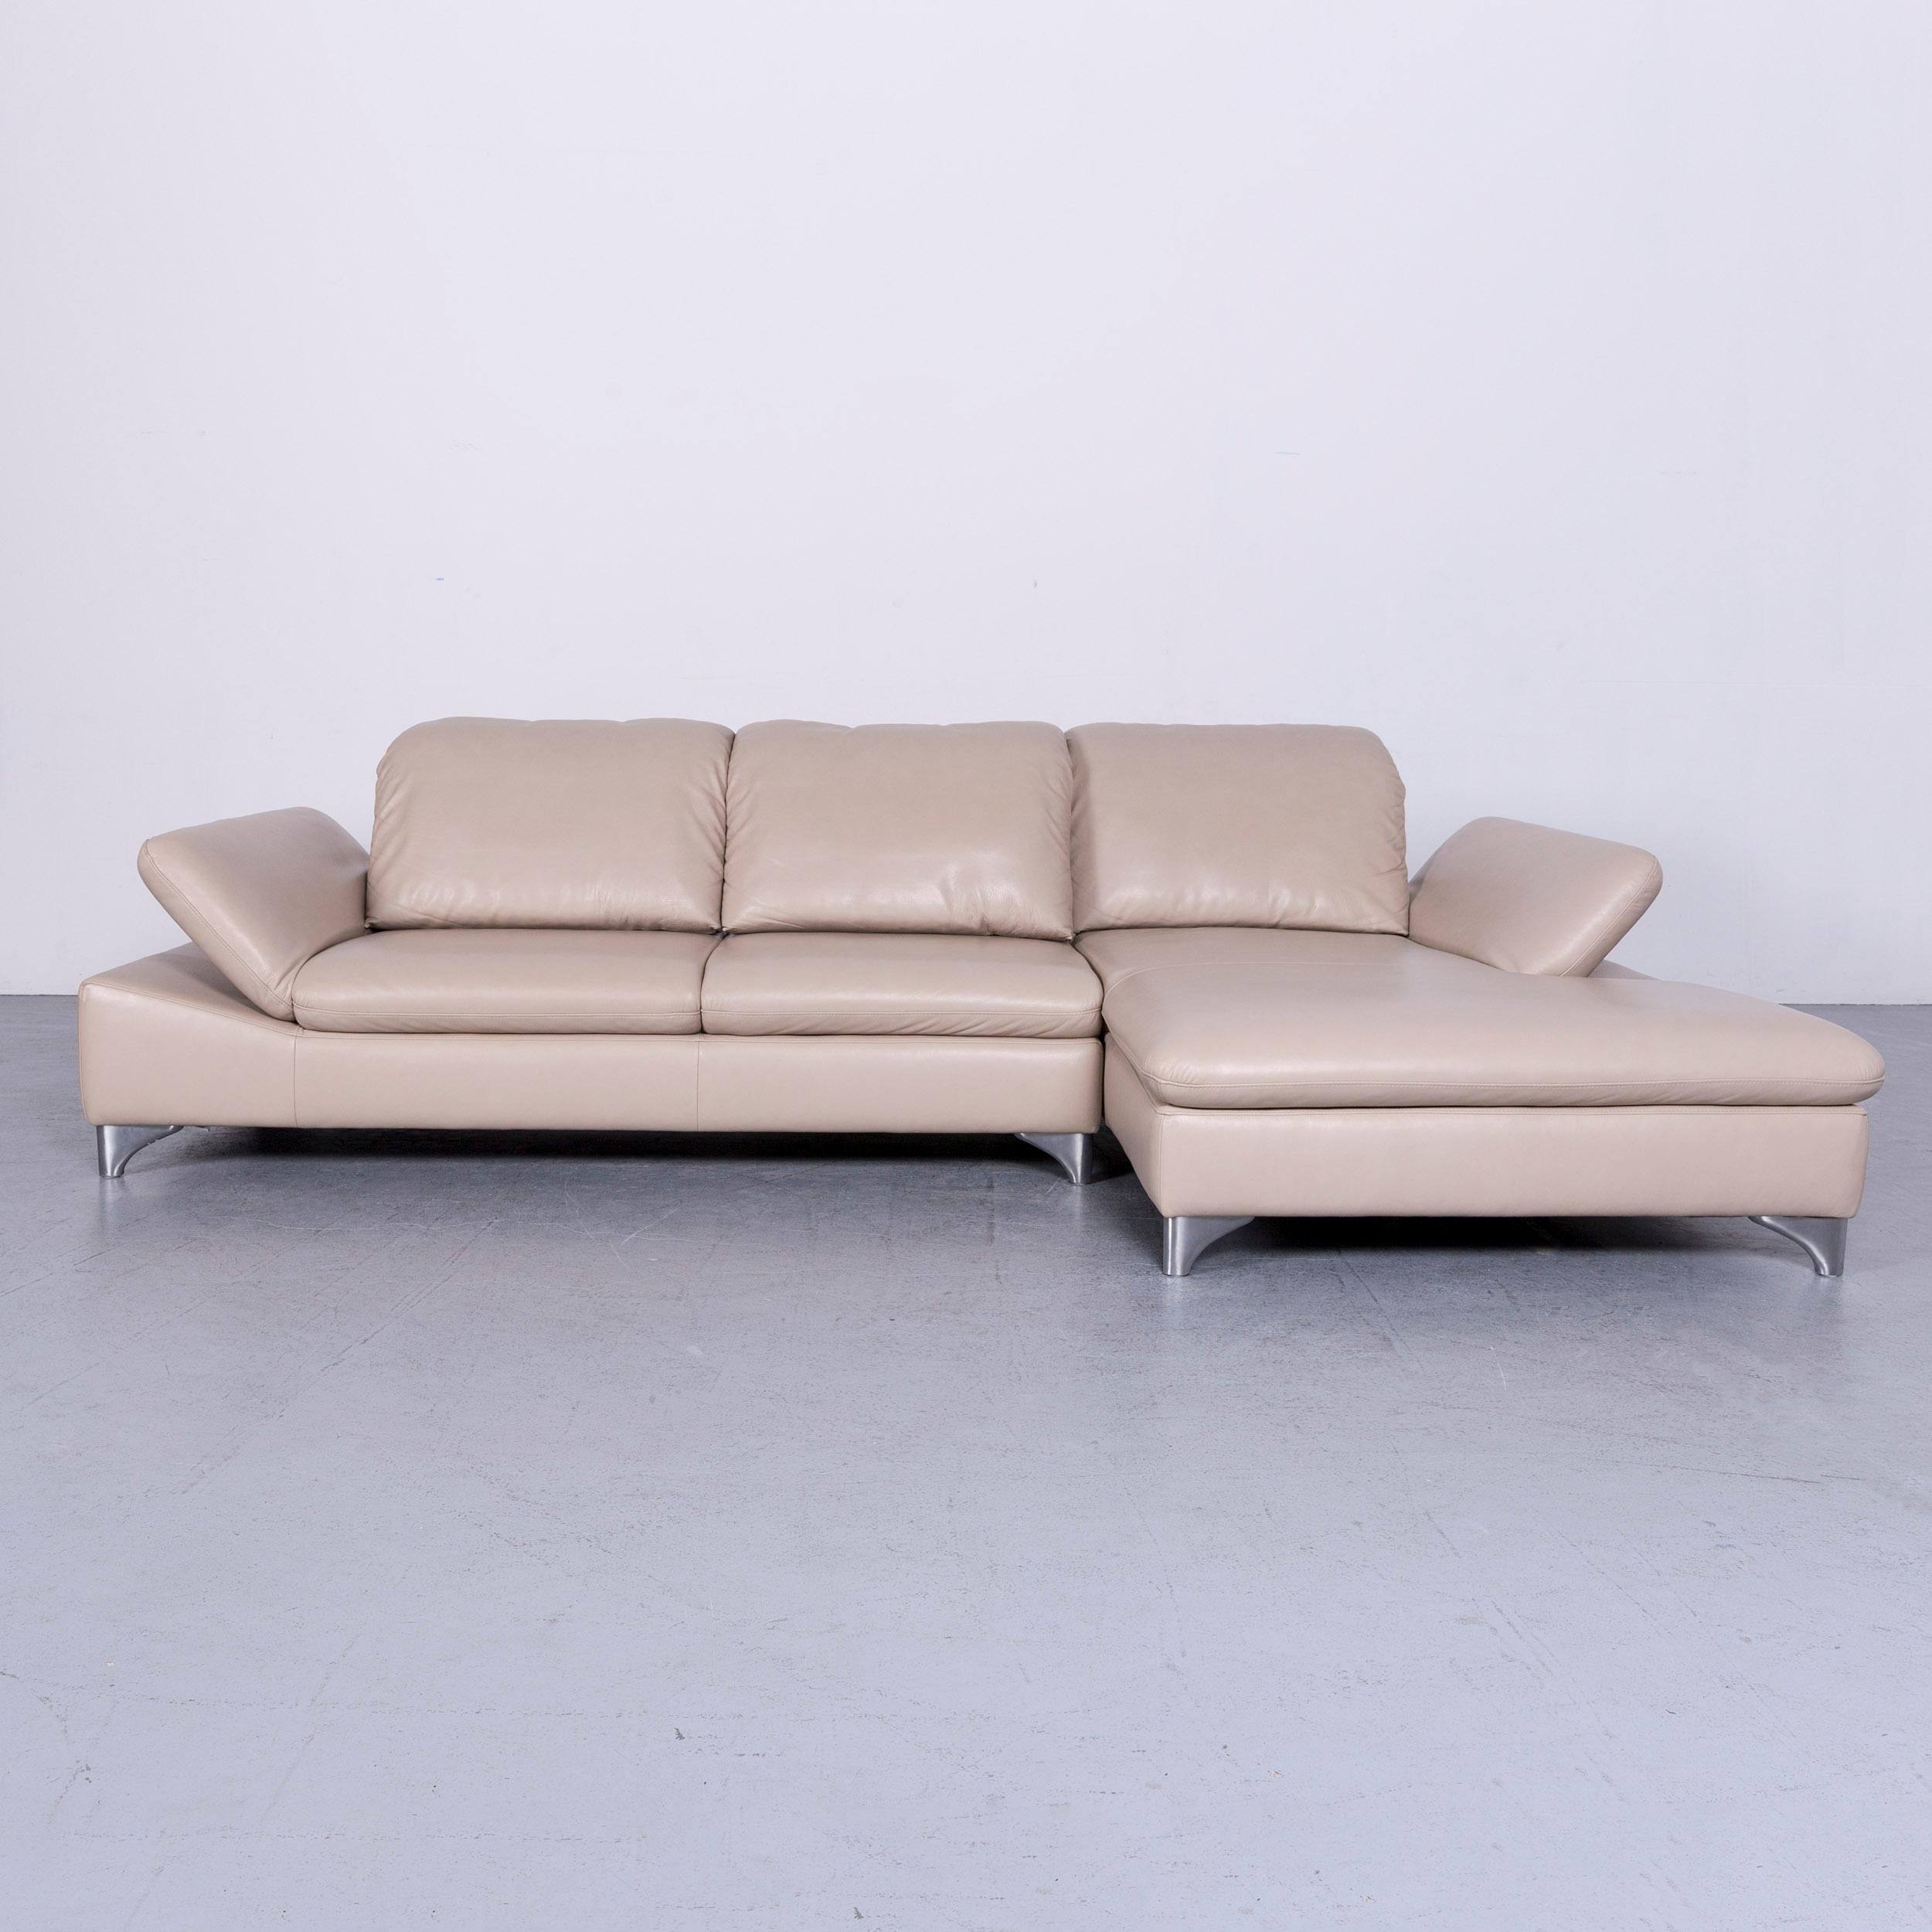 Contemporary Willi Schillig Enjoy Designer Leather Sofa Footstool Set Beige Modern